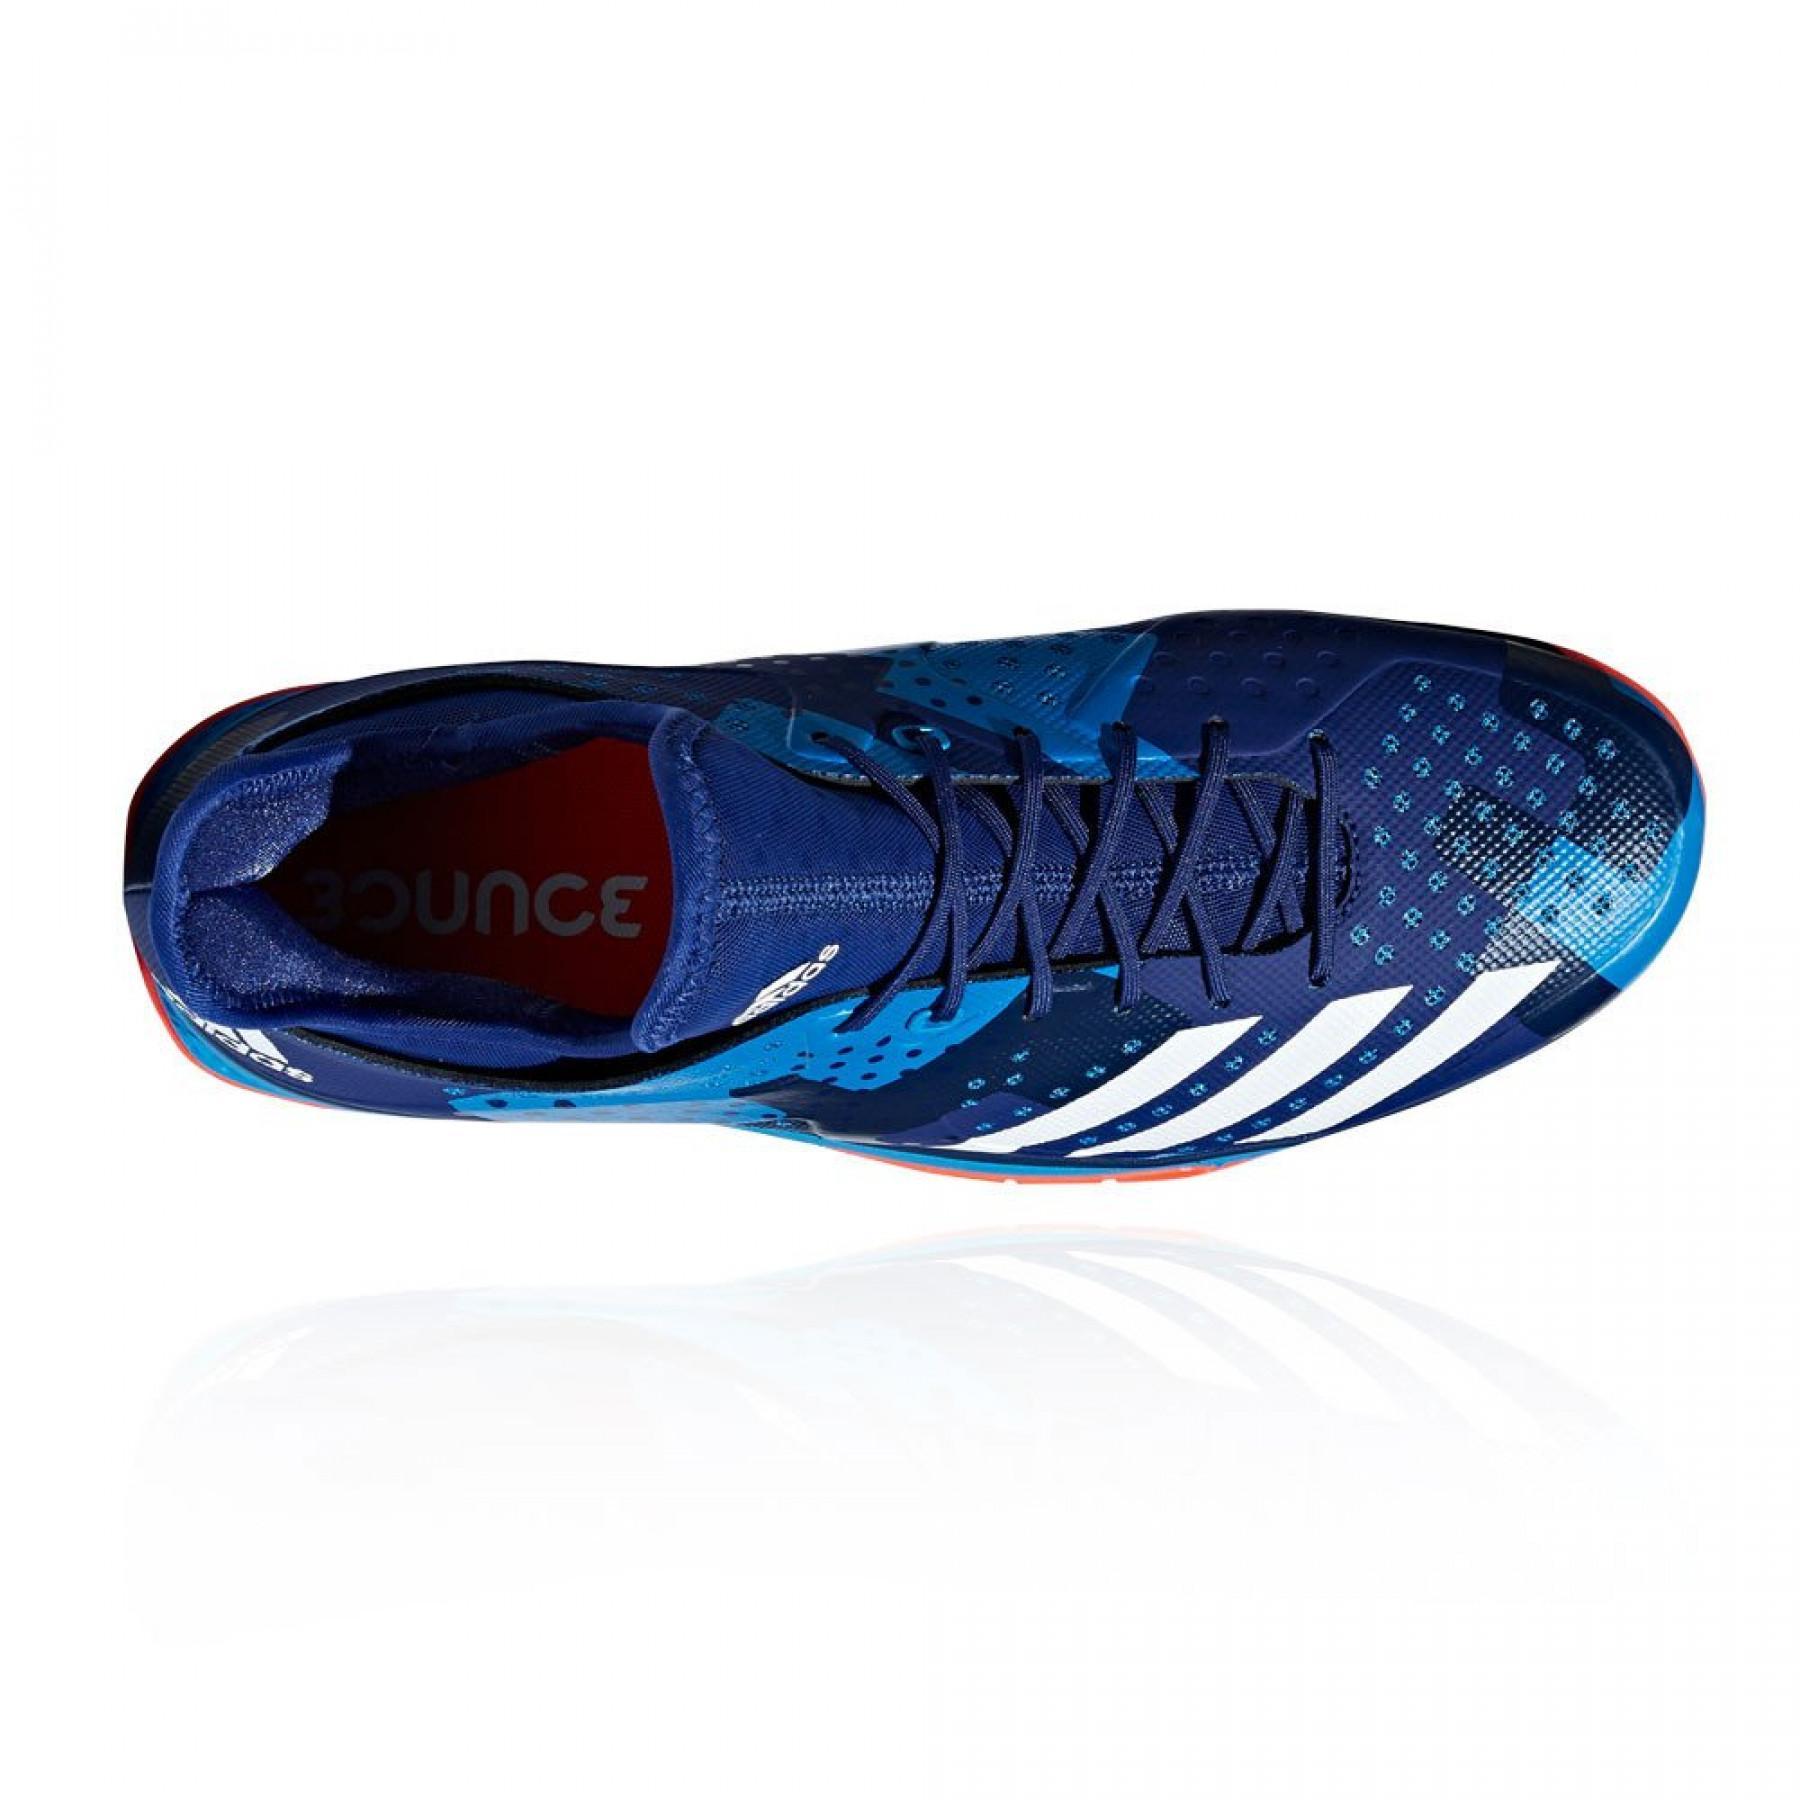 adidas counterblast bounce shoes